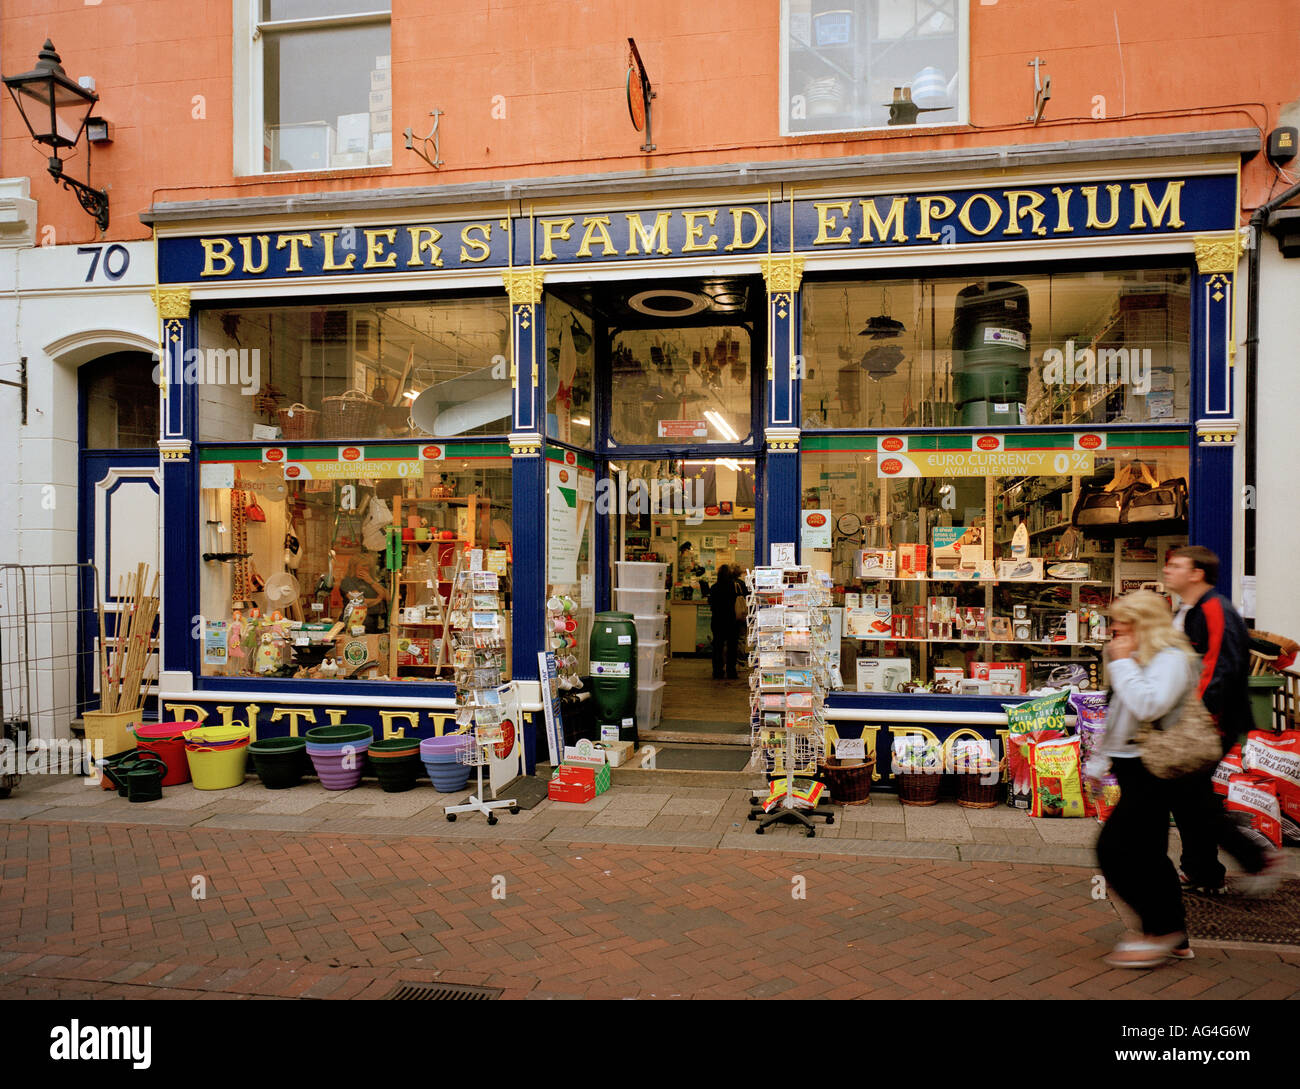 El Butlers famoso Emporium Hastings Old Town, East Sussex, Inglaterra, Reino Unido. Foto de stock